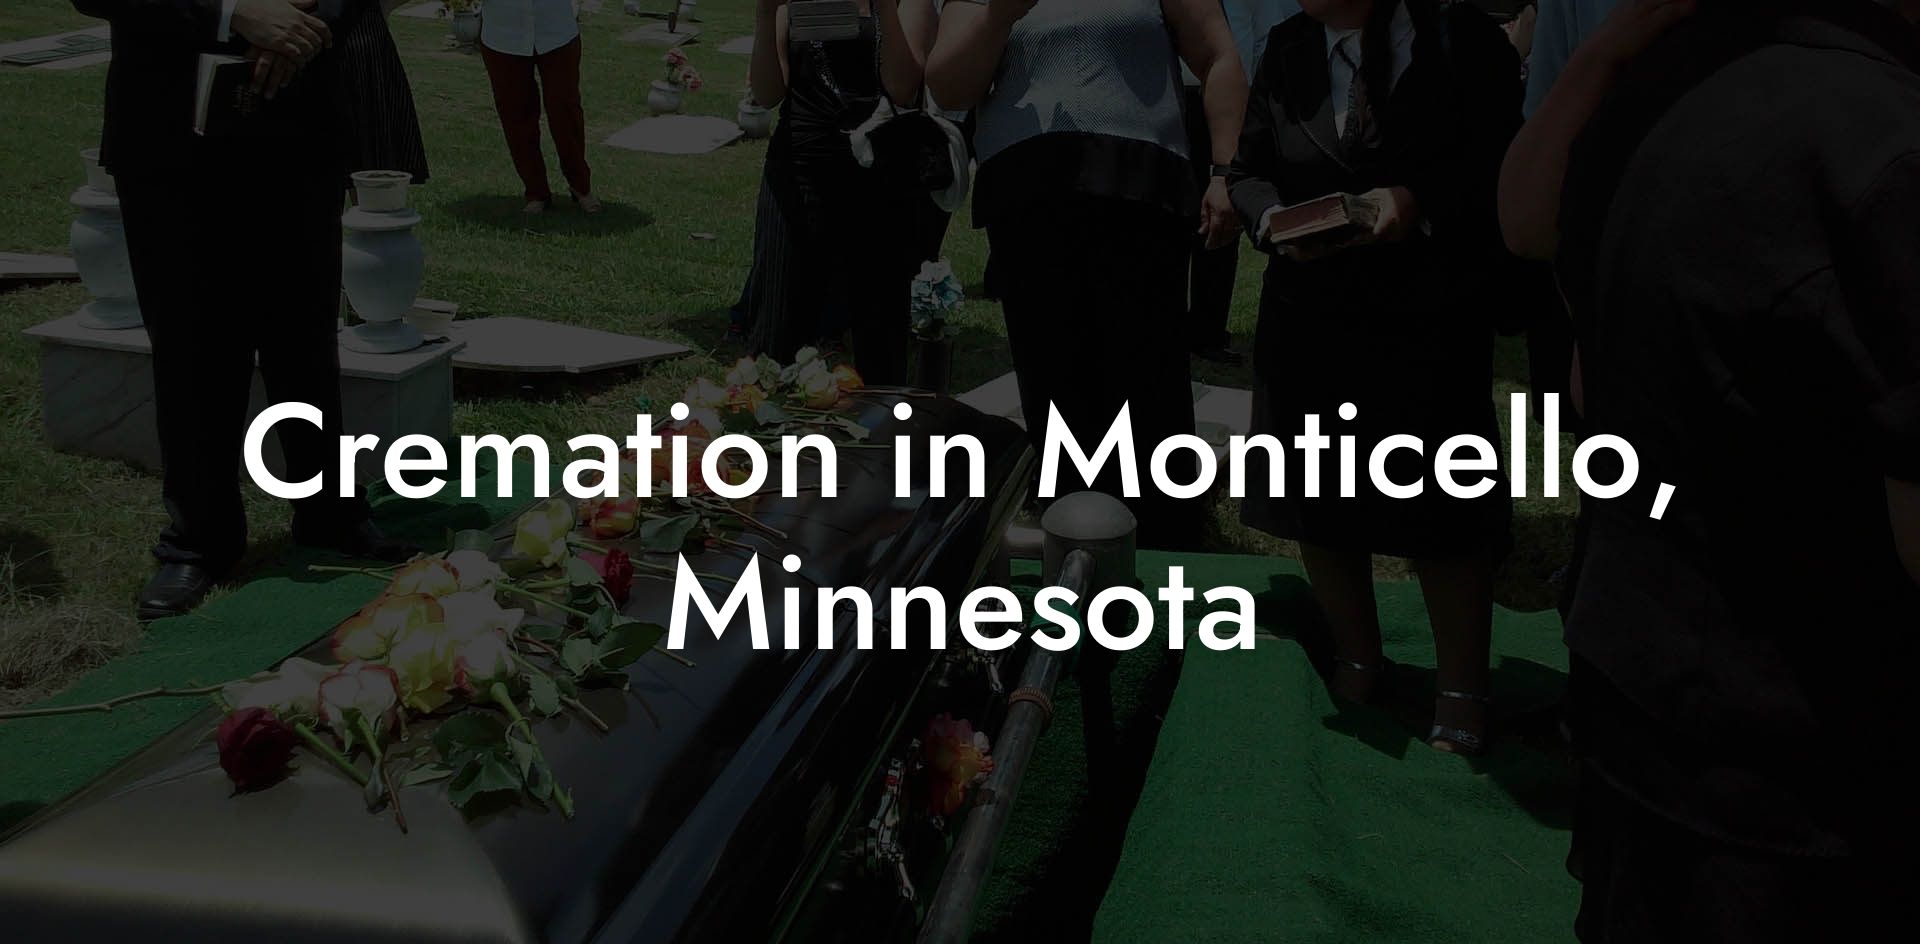 Cremation in Monticello, Minnesota